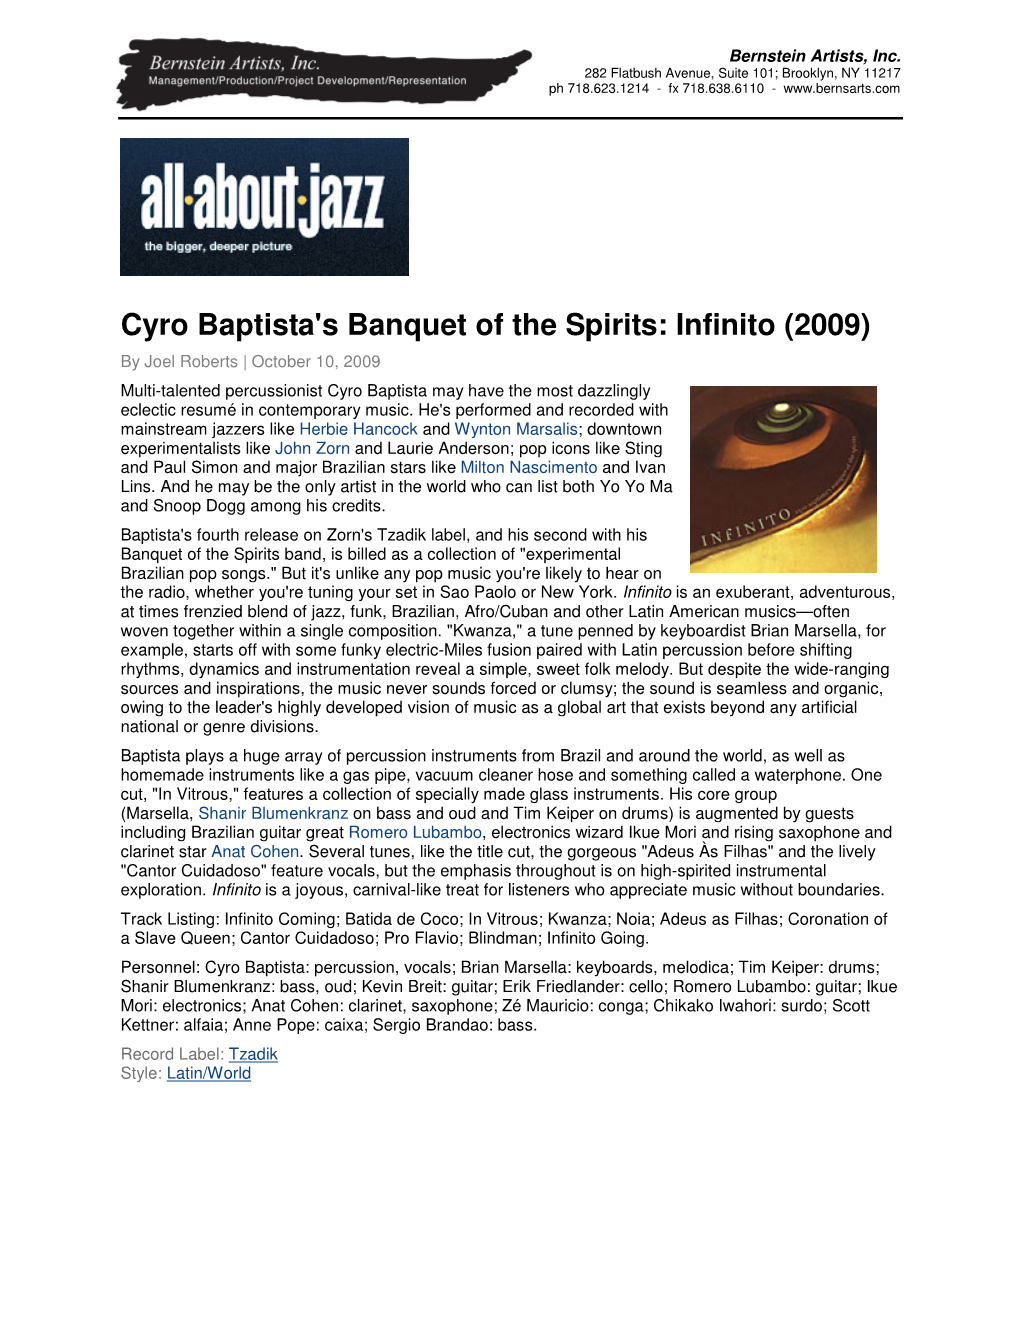 Cyro Baptista's Banquet of the Spirits: Infinito (2009)